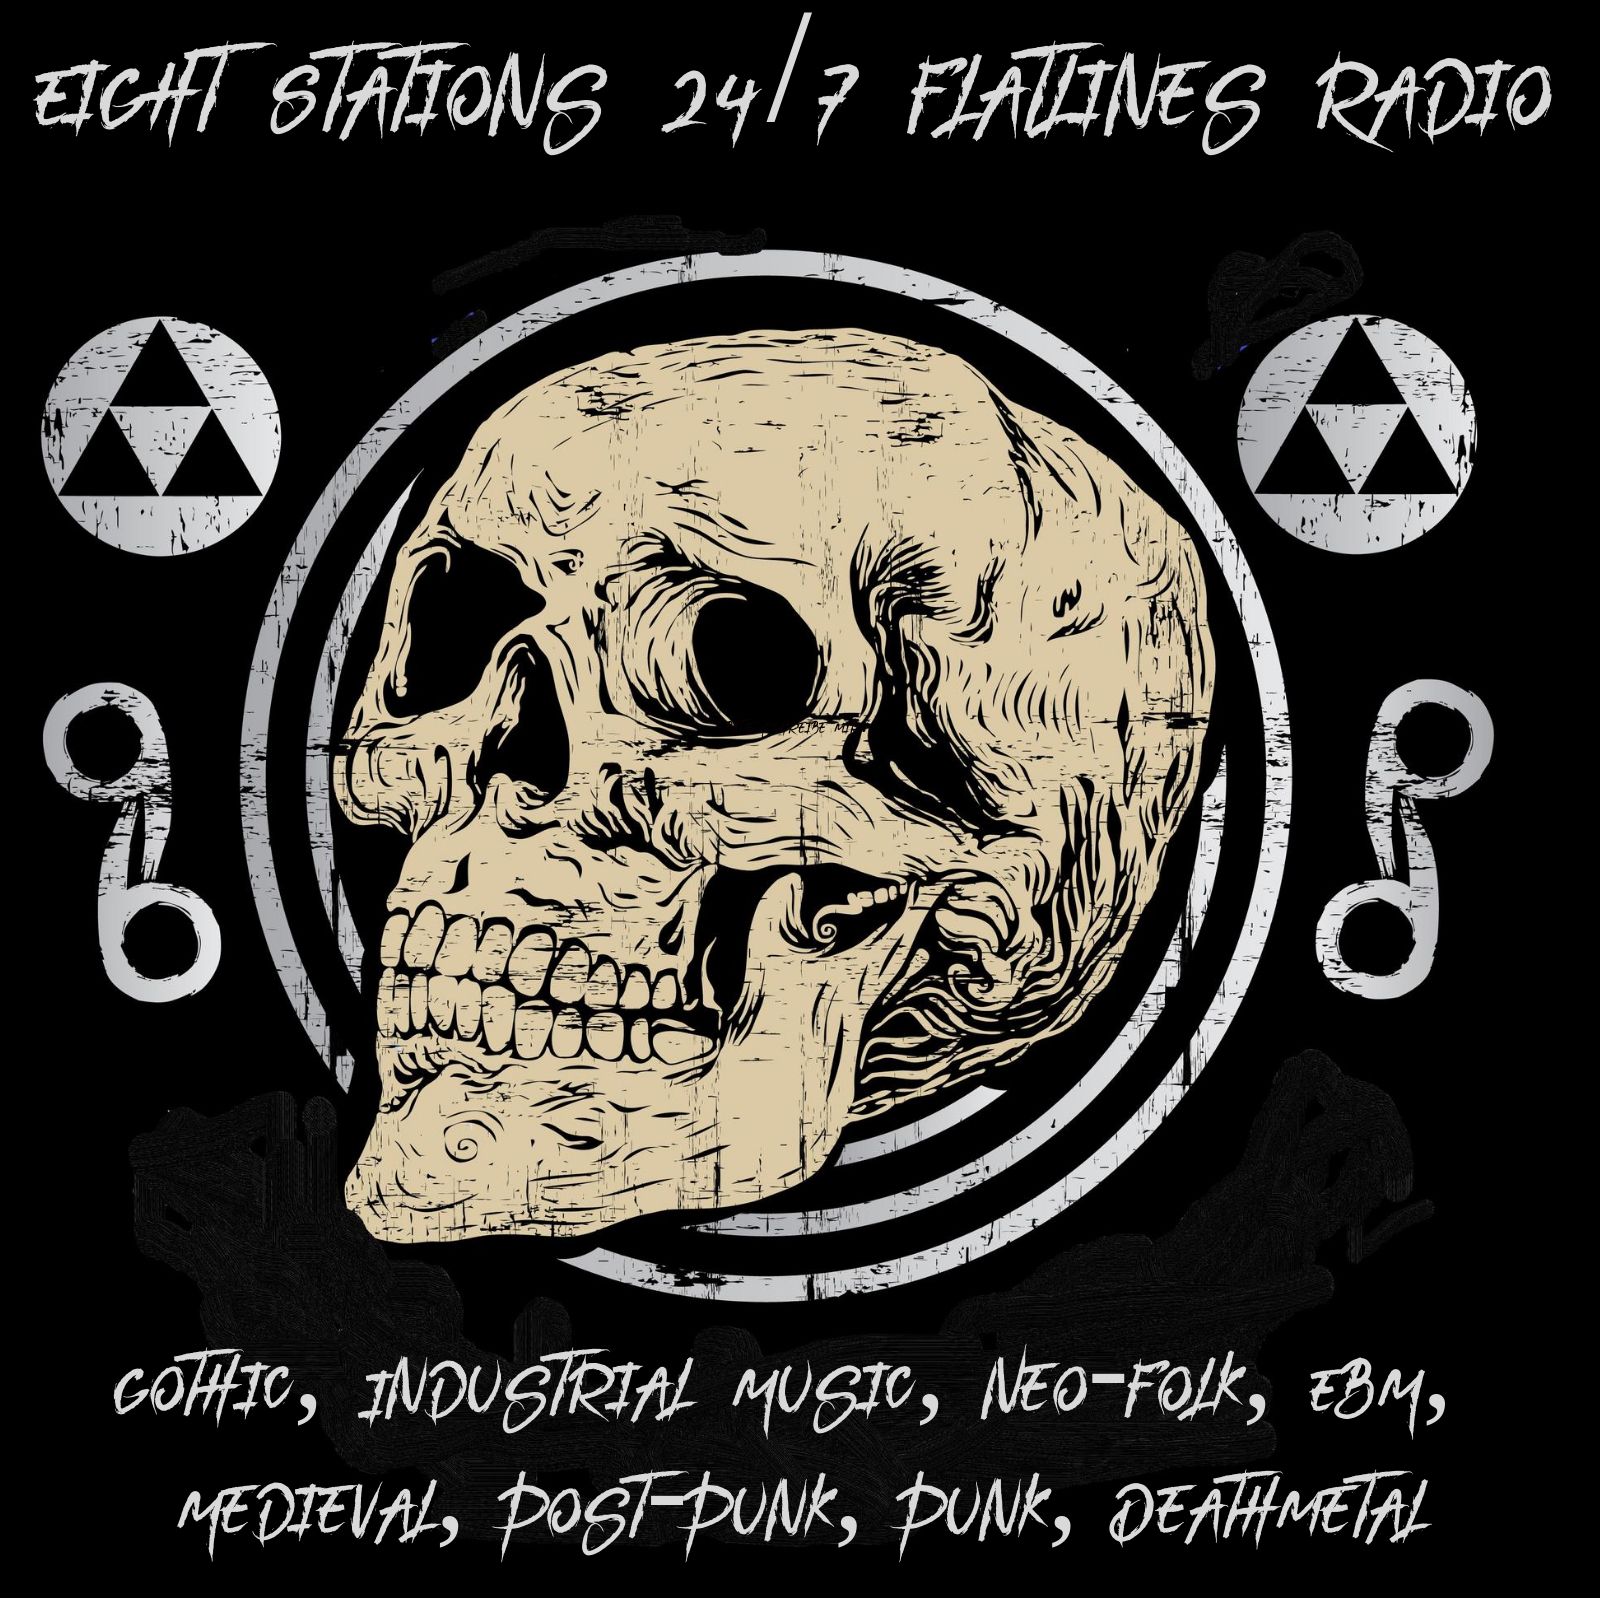 Eight Stations, 24/7 Flatlines Radio – Dark Entertainment